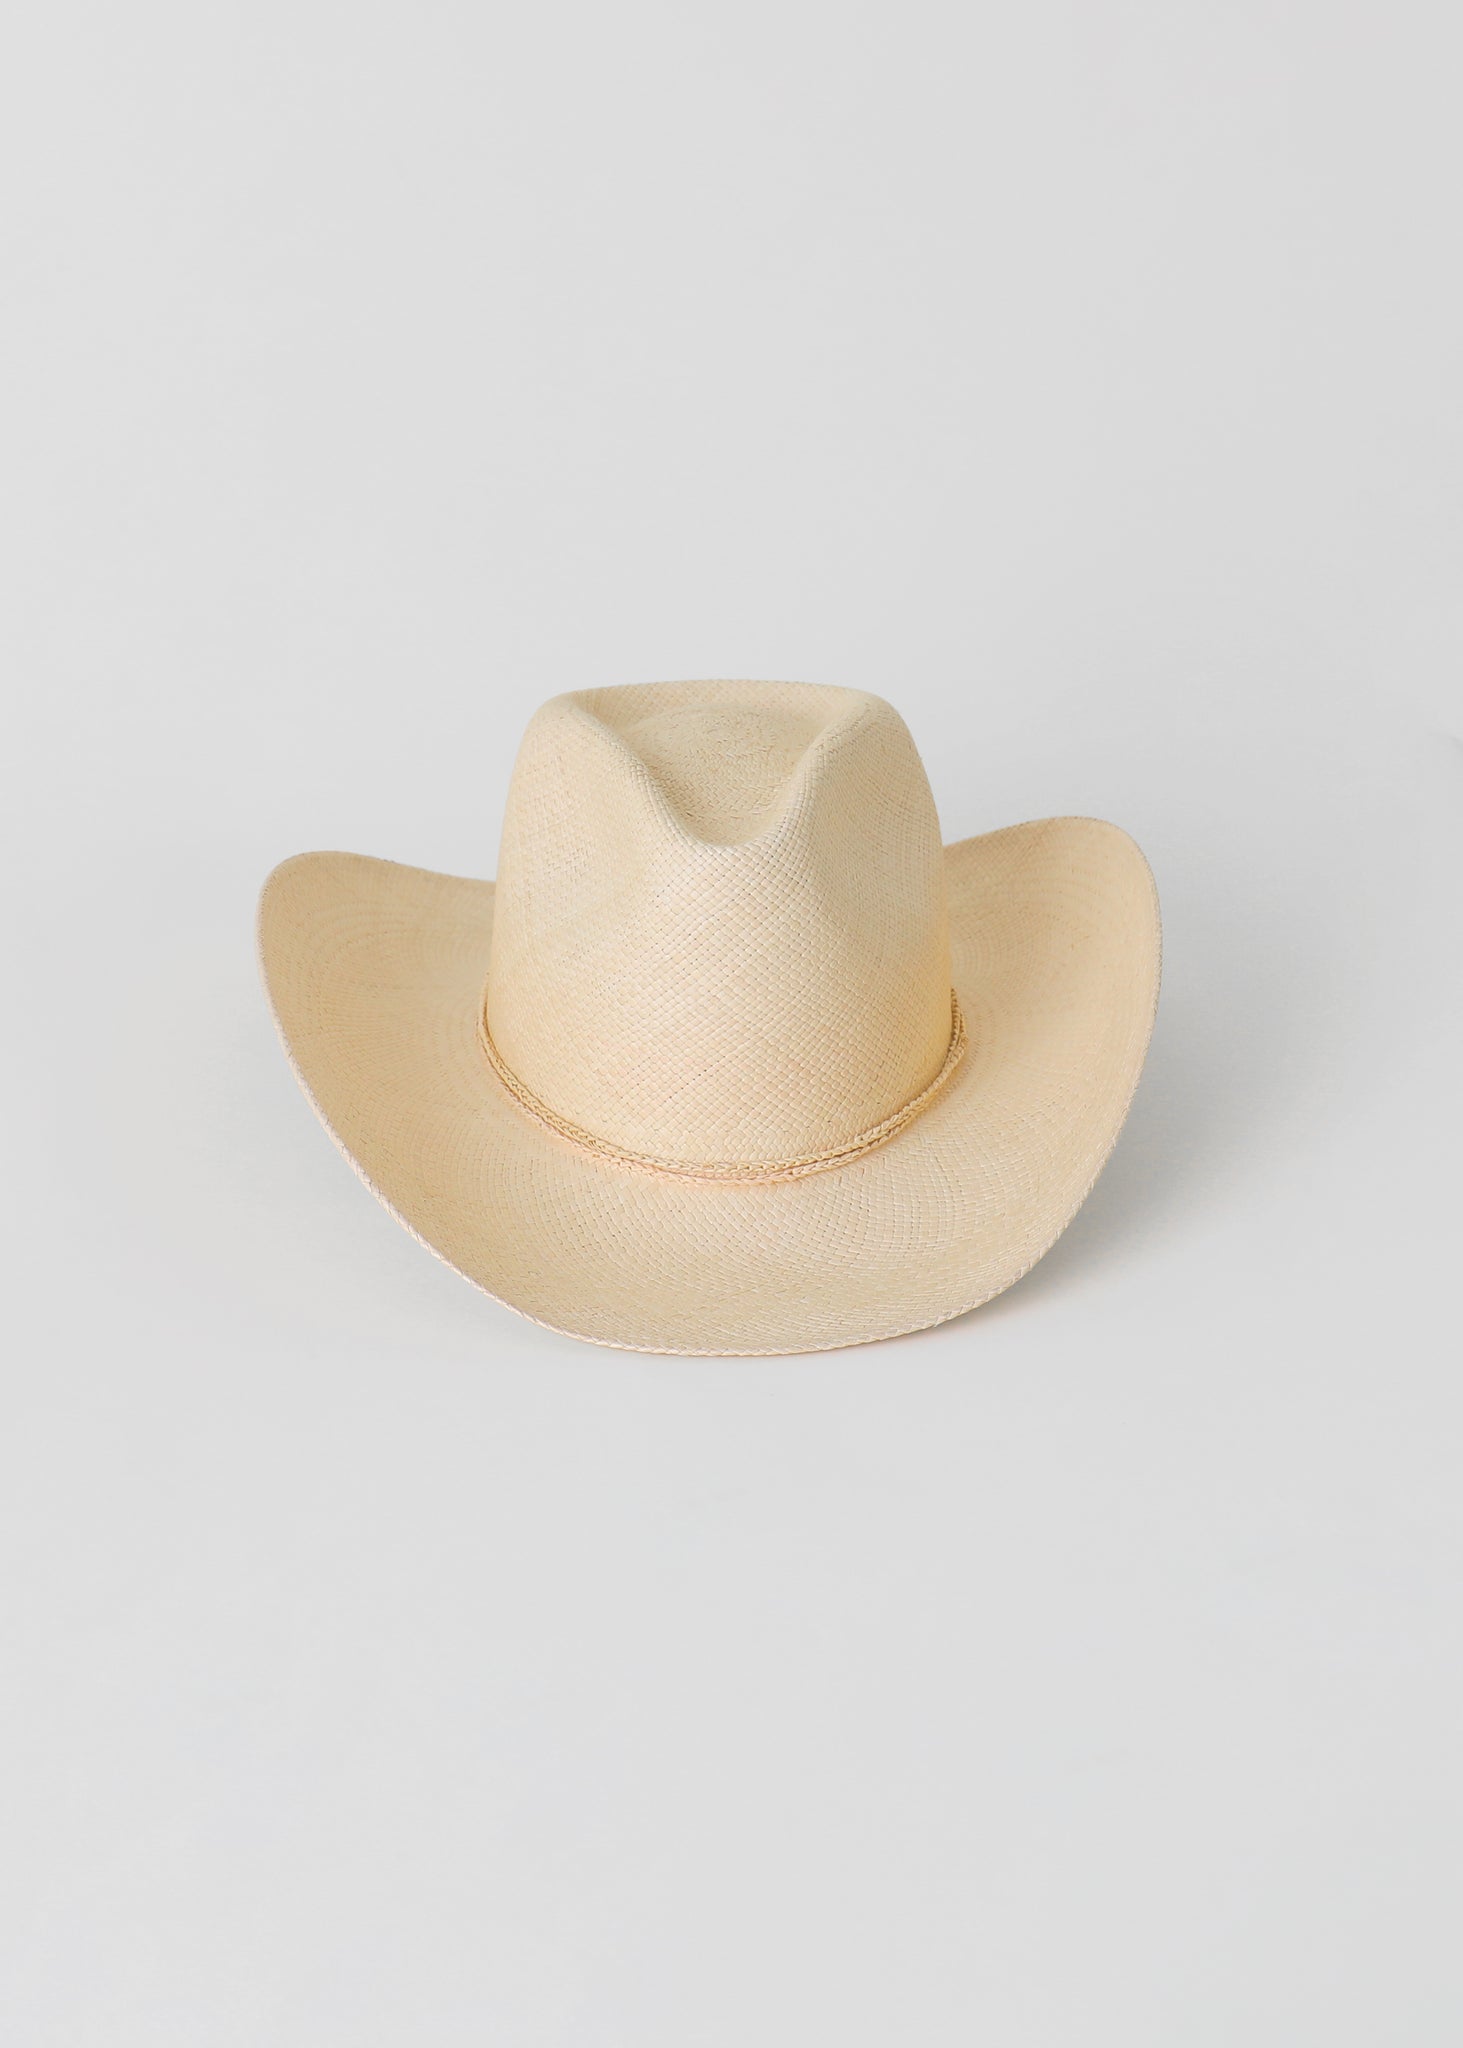 cowboy hats for women